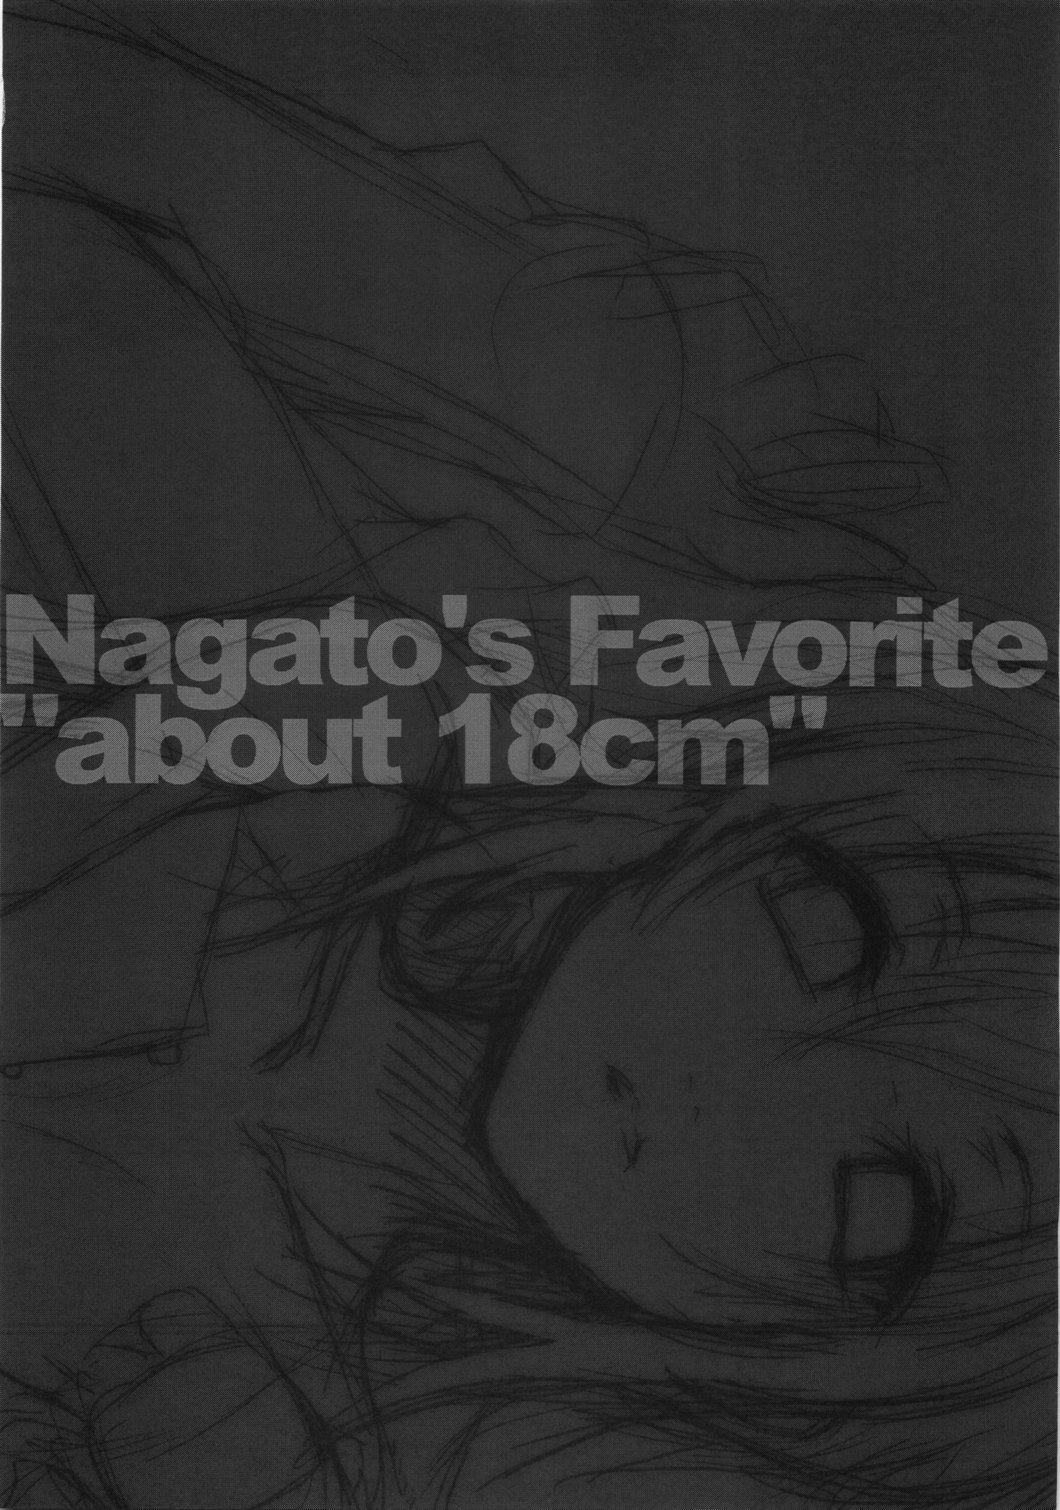 Nagato's Favorite "about 18cm" 15